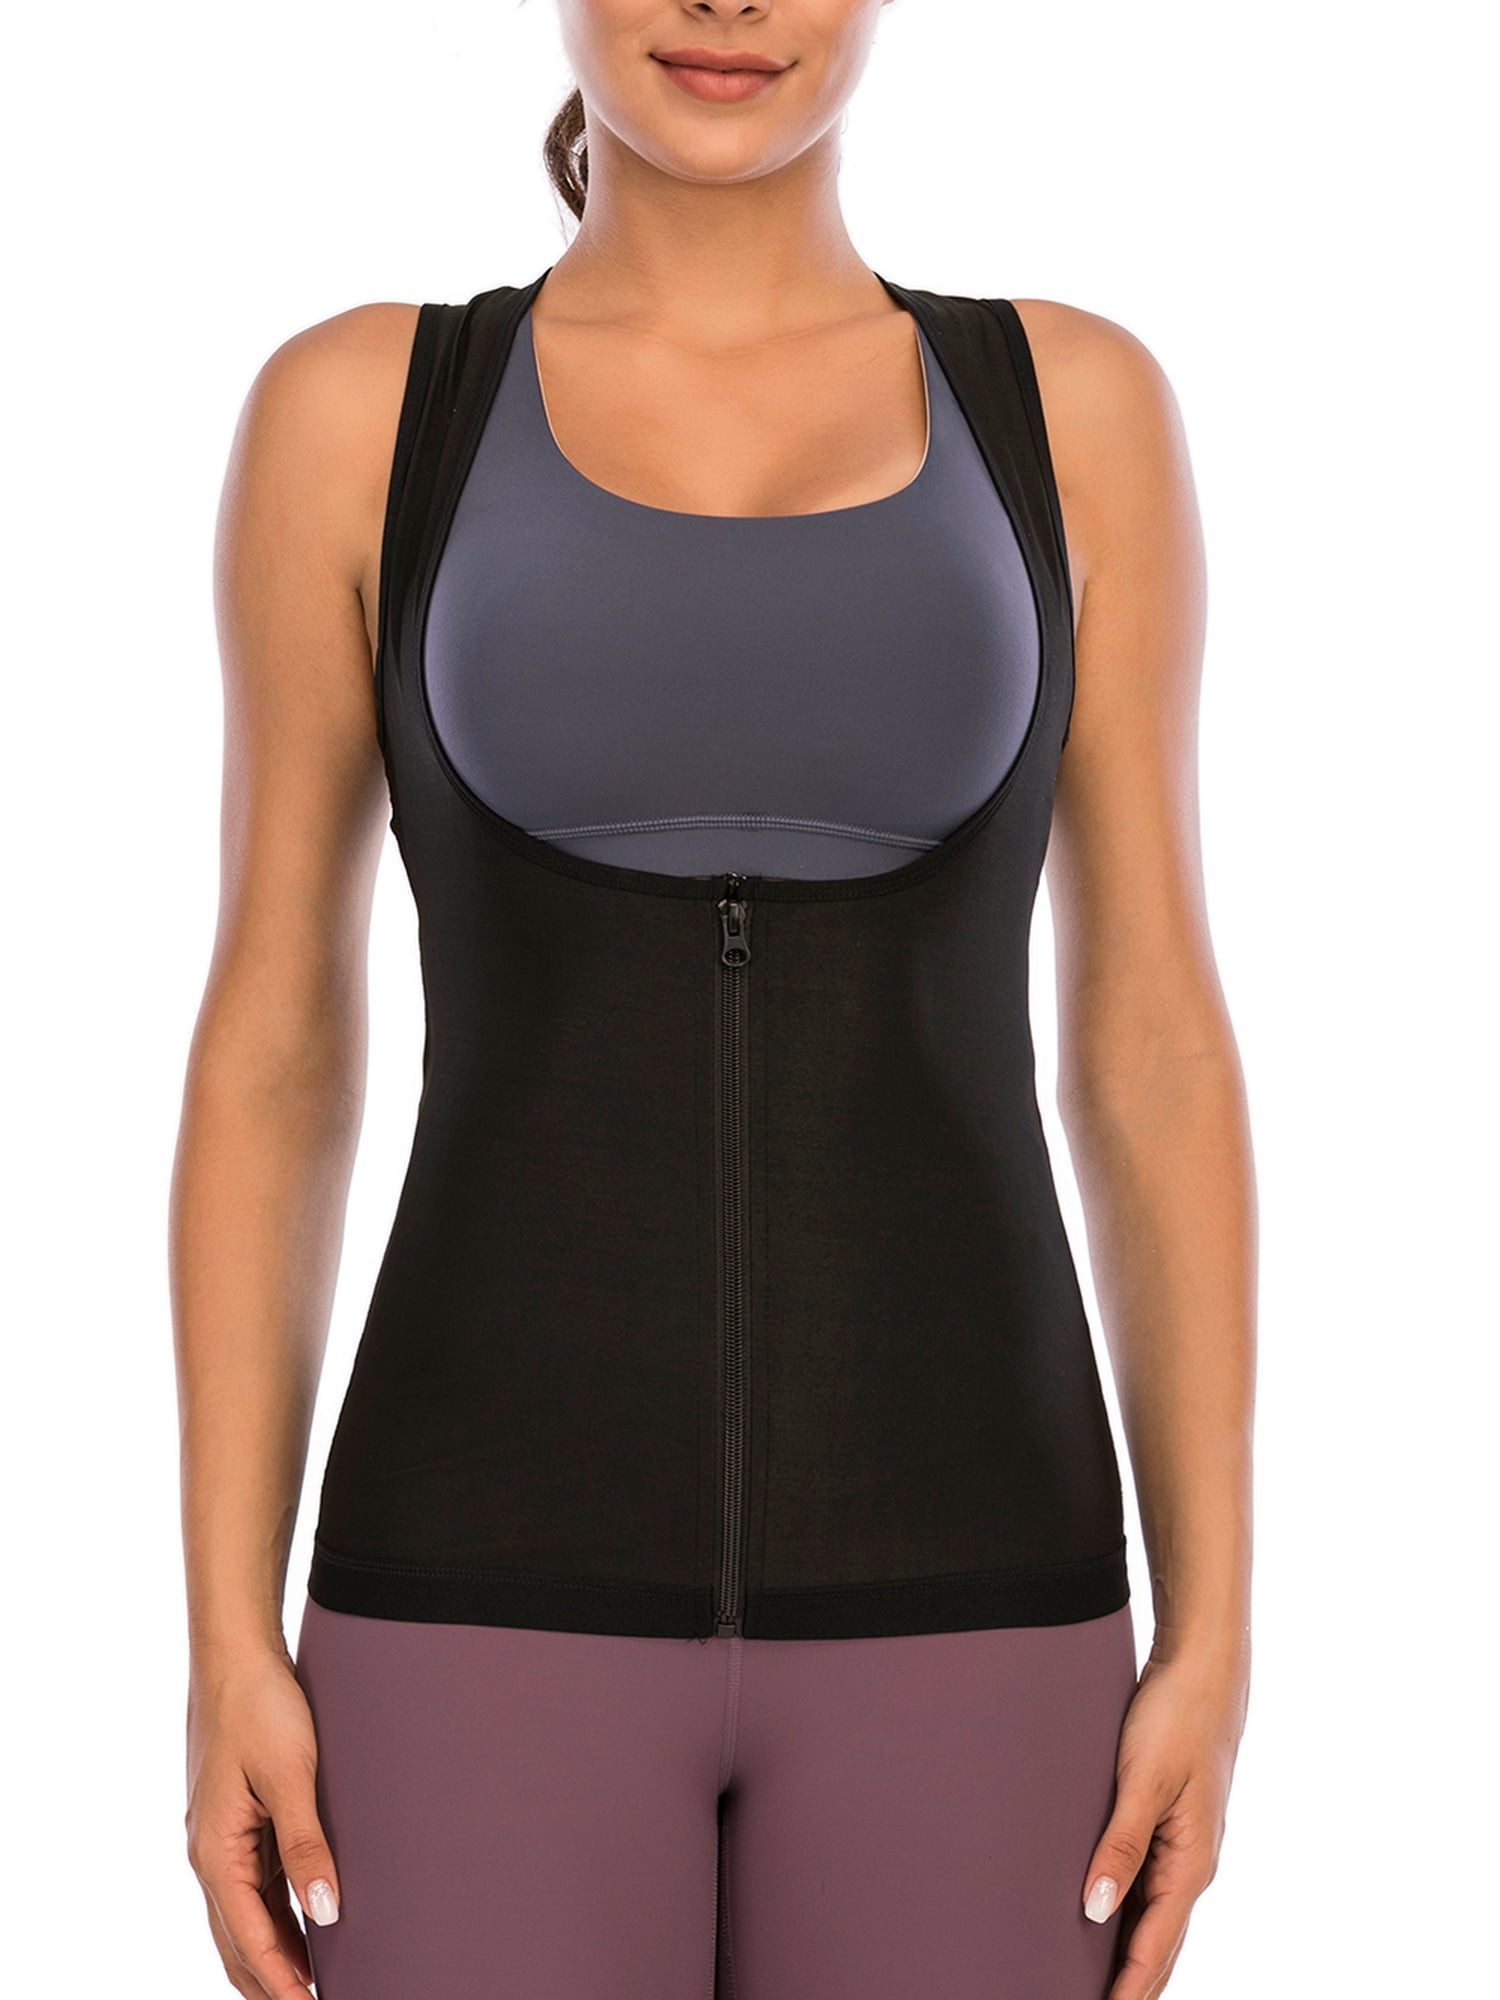 Sweetlover Sweat Vest for Weight Loss Neoprene Sauna Suit Hot Body Shaper Underbust Workout Top Tummy Control Tank Top Sport Shirt 